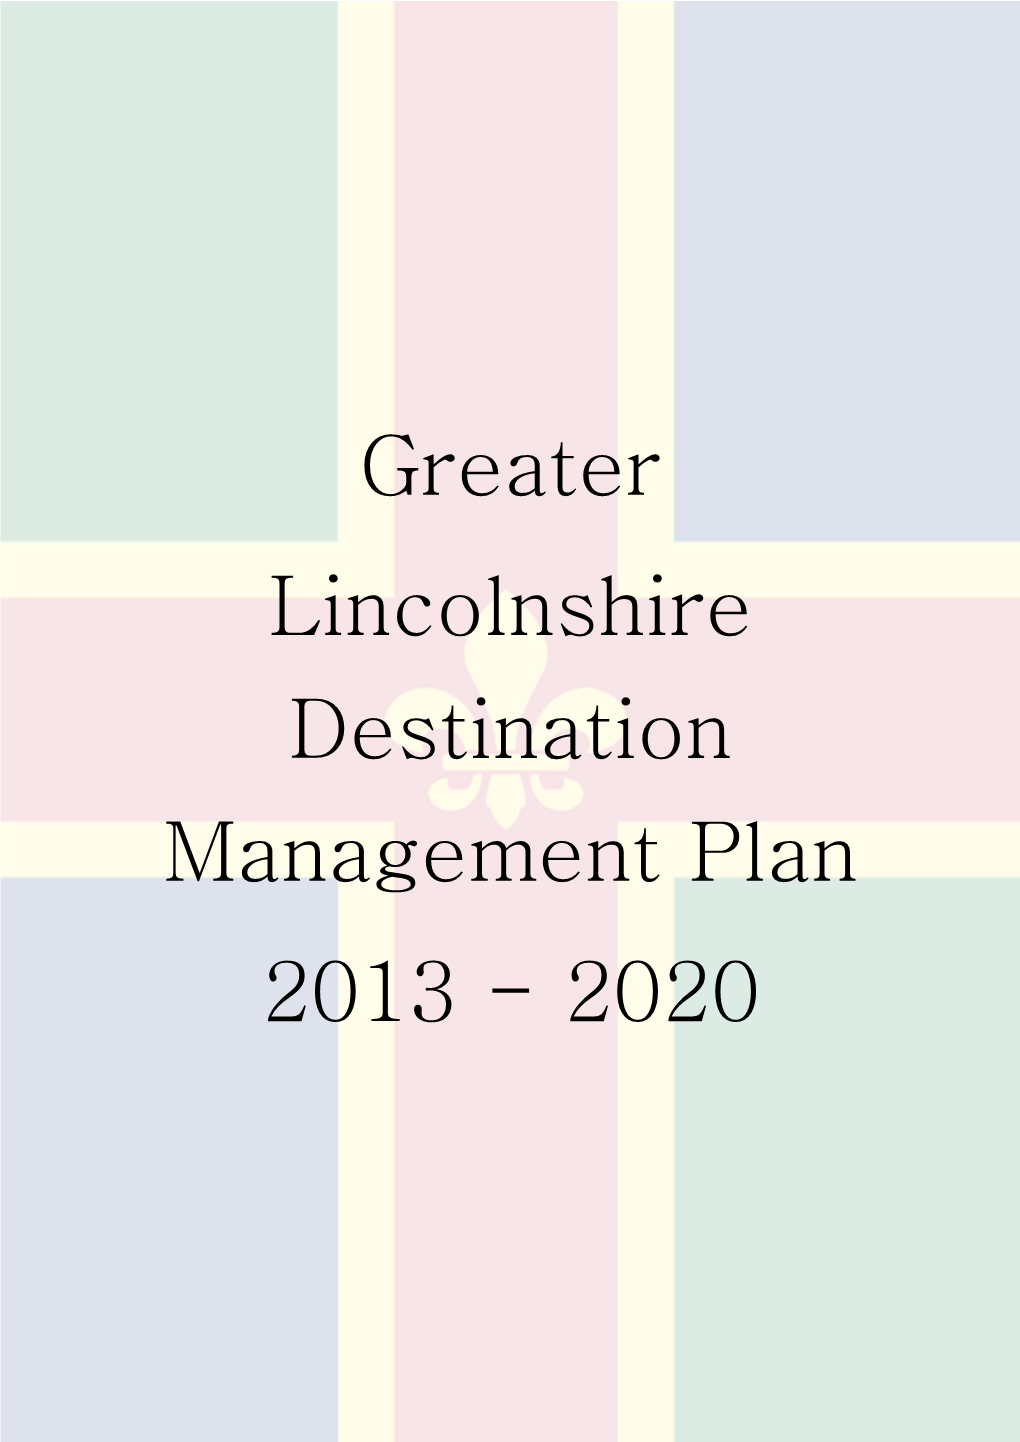 Destination Management Plan 2013 - 2020